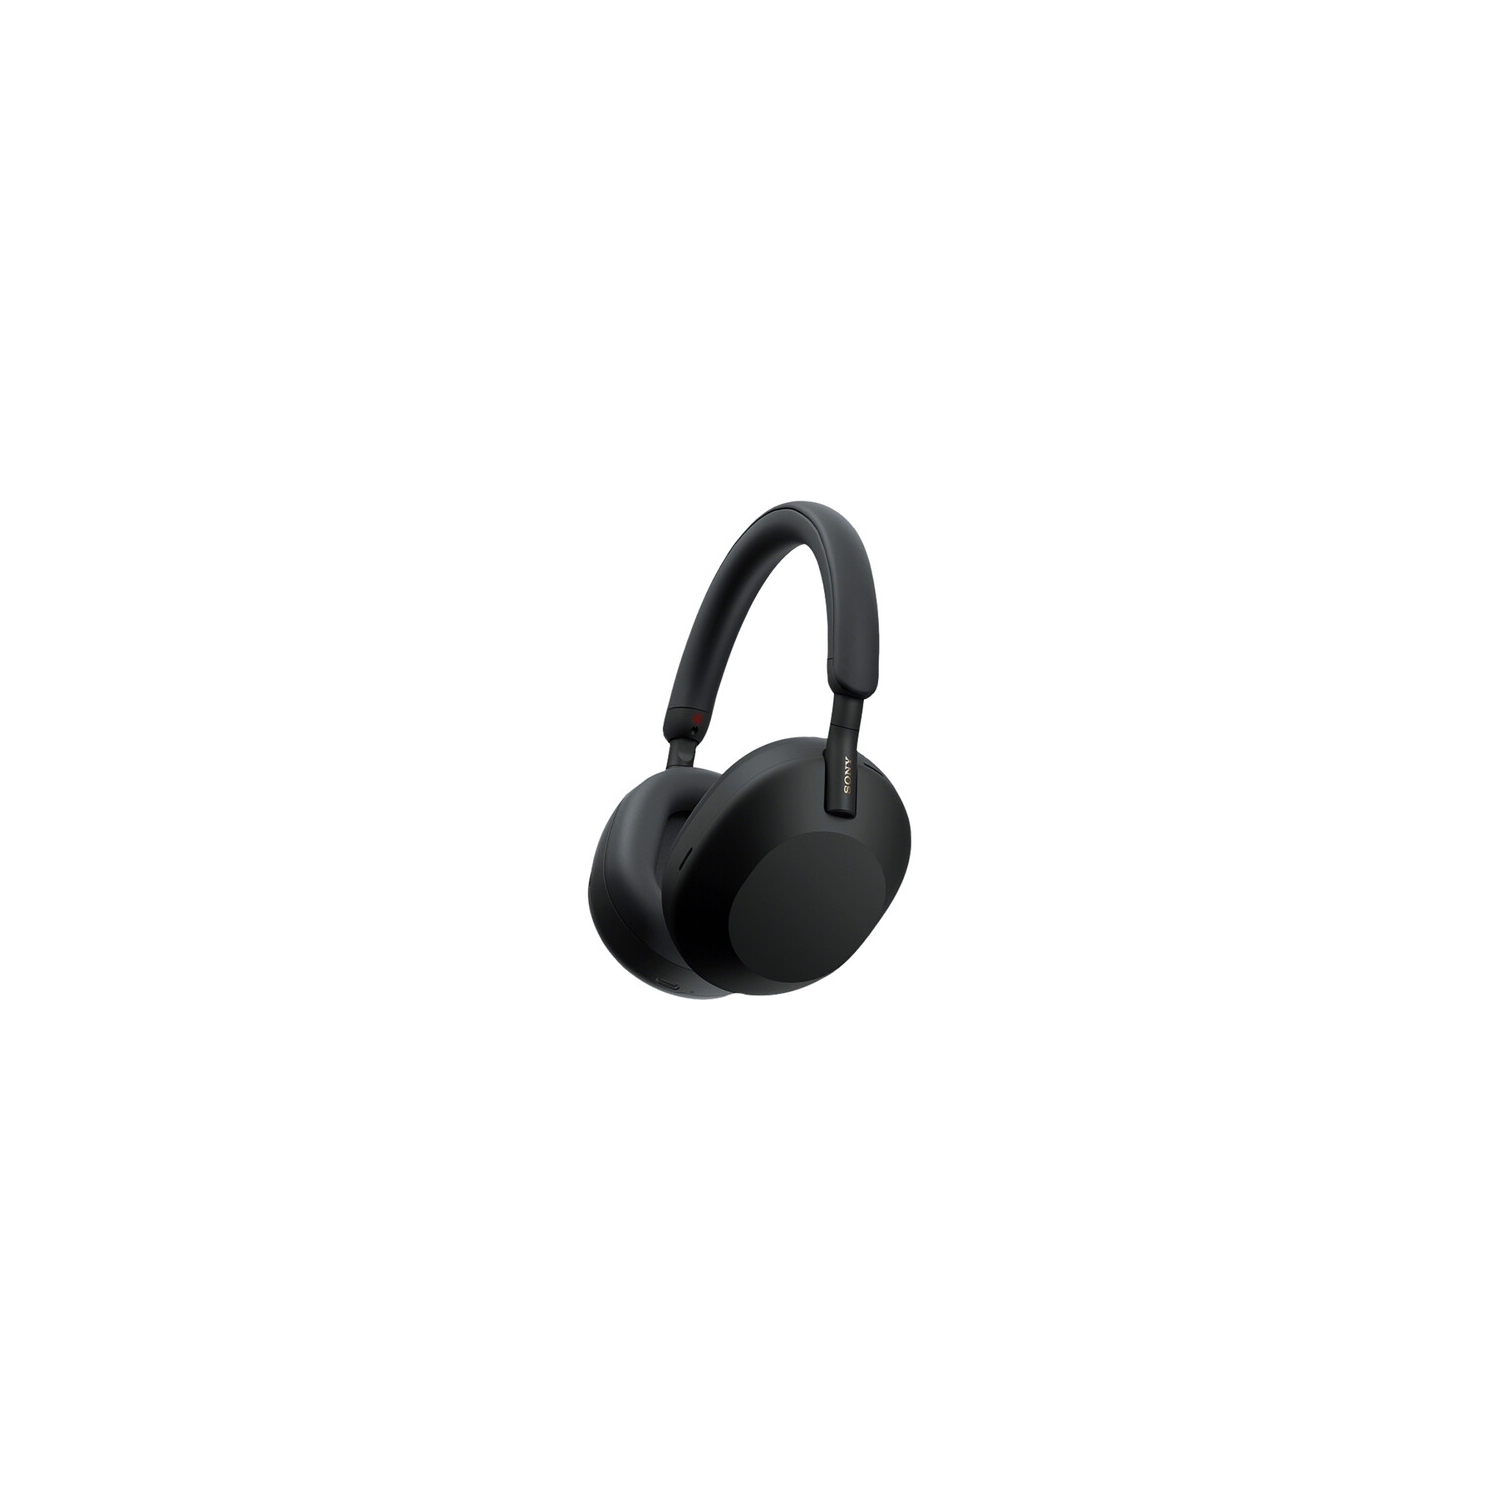 Sony WH-1000XM5 Wireless Noise-Canceling Over-Ear Headphones (Black) - Brand New